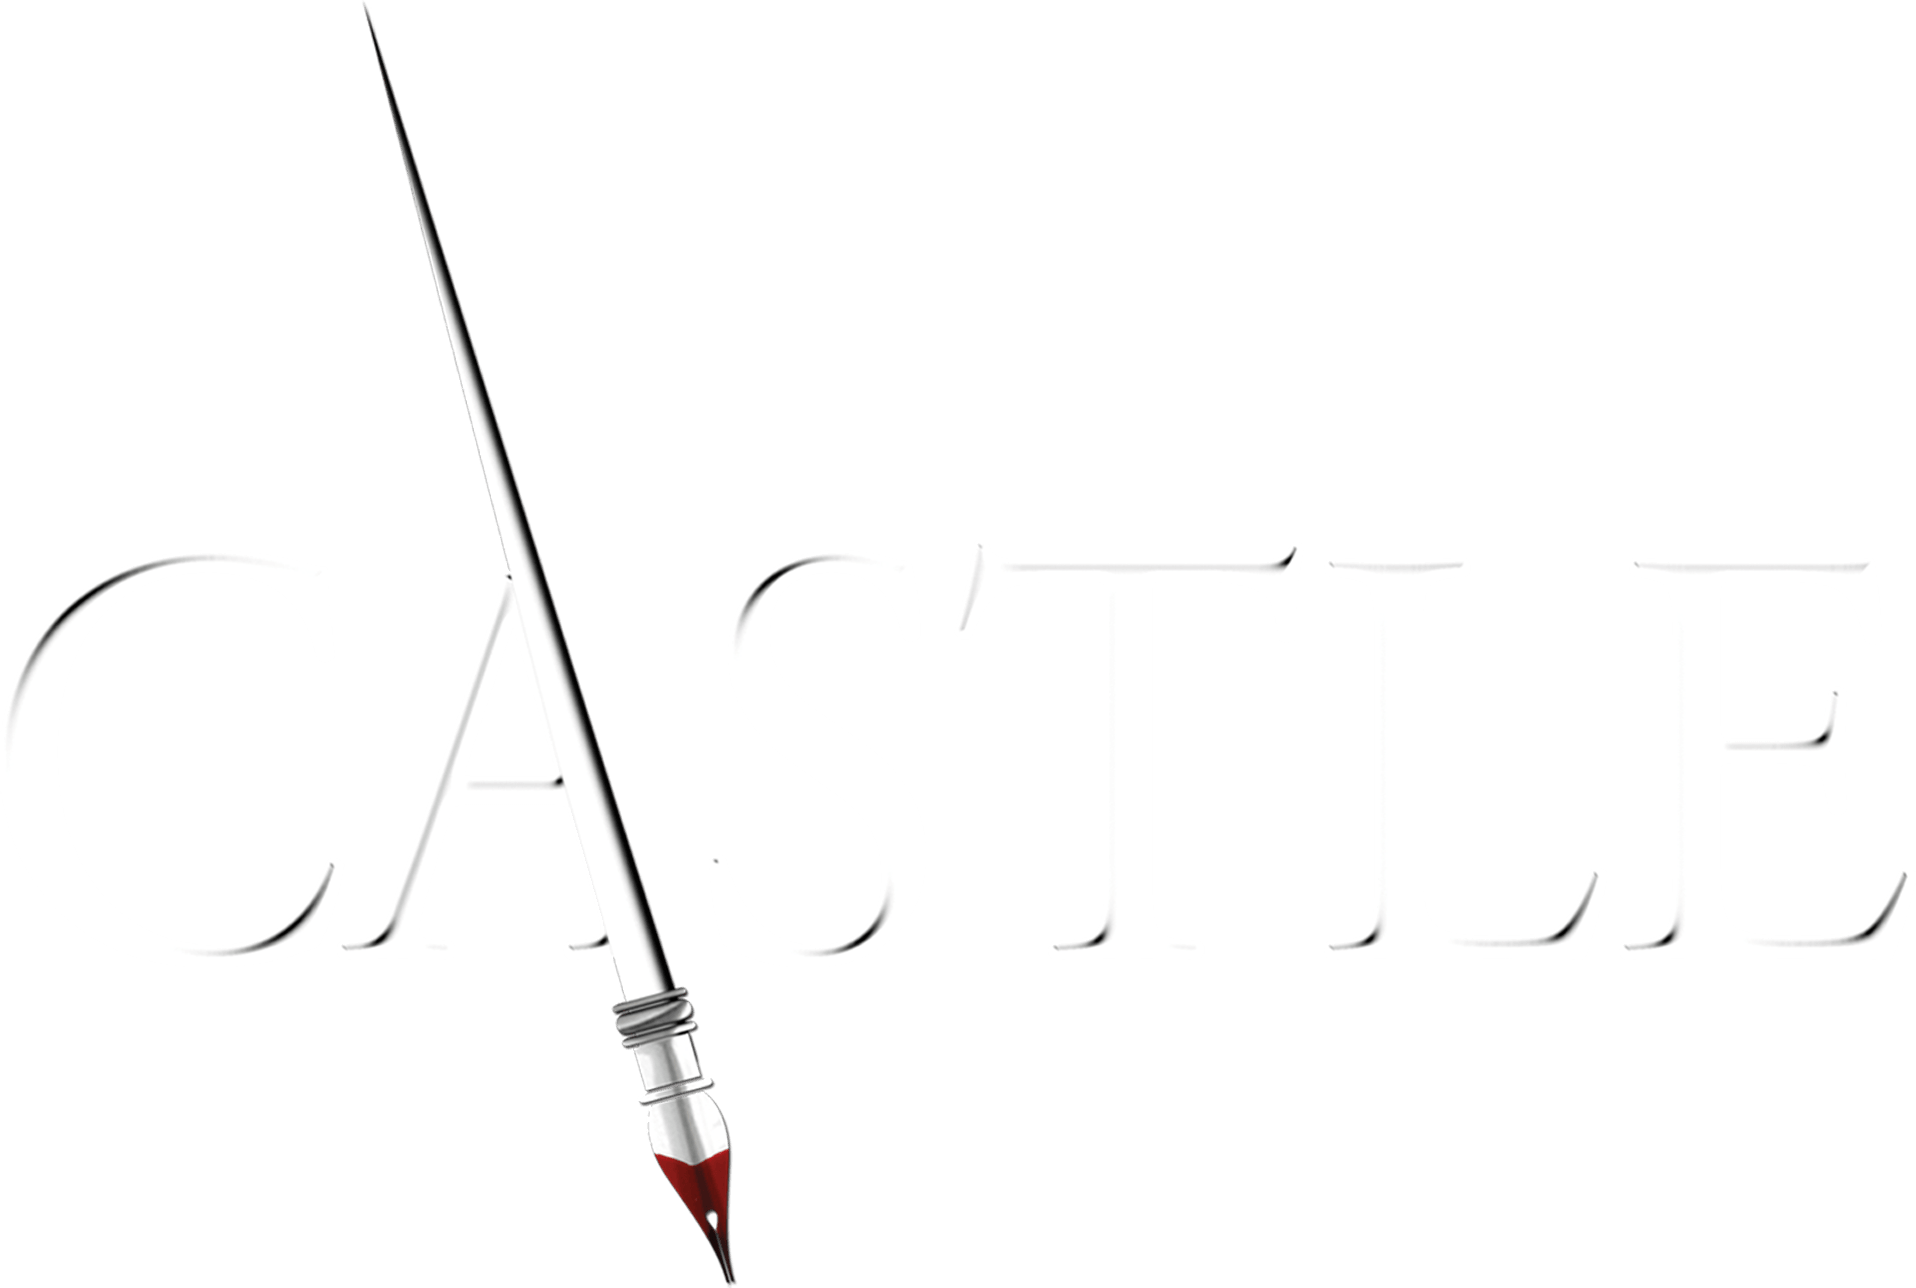 Donde assistir Castle - ver séries online